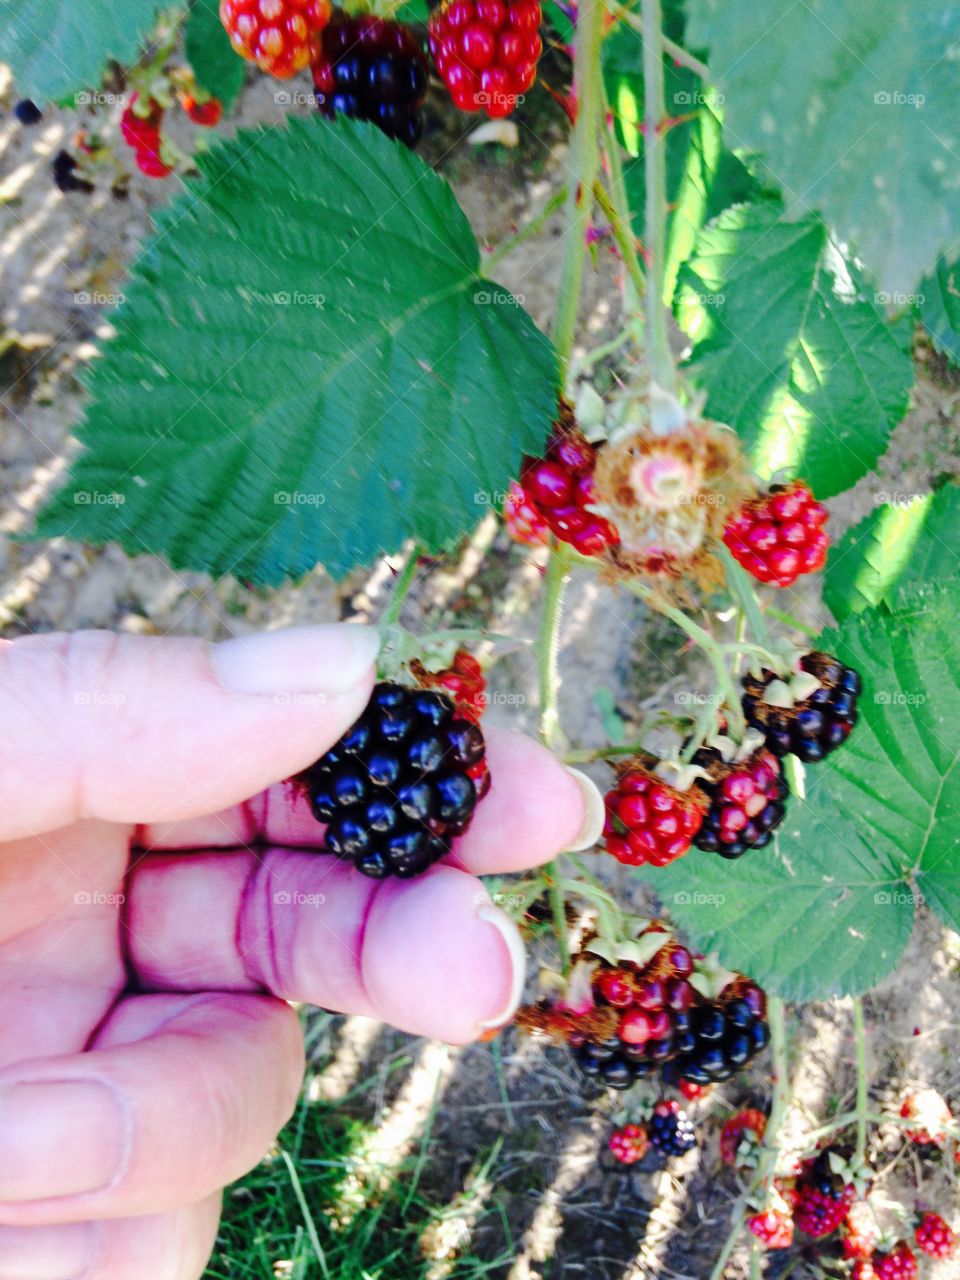 Picking blackberries 